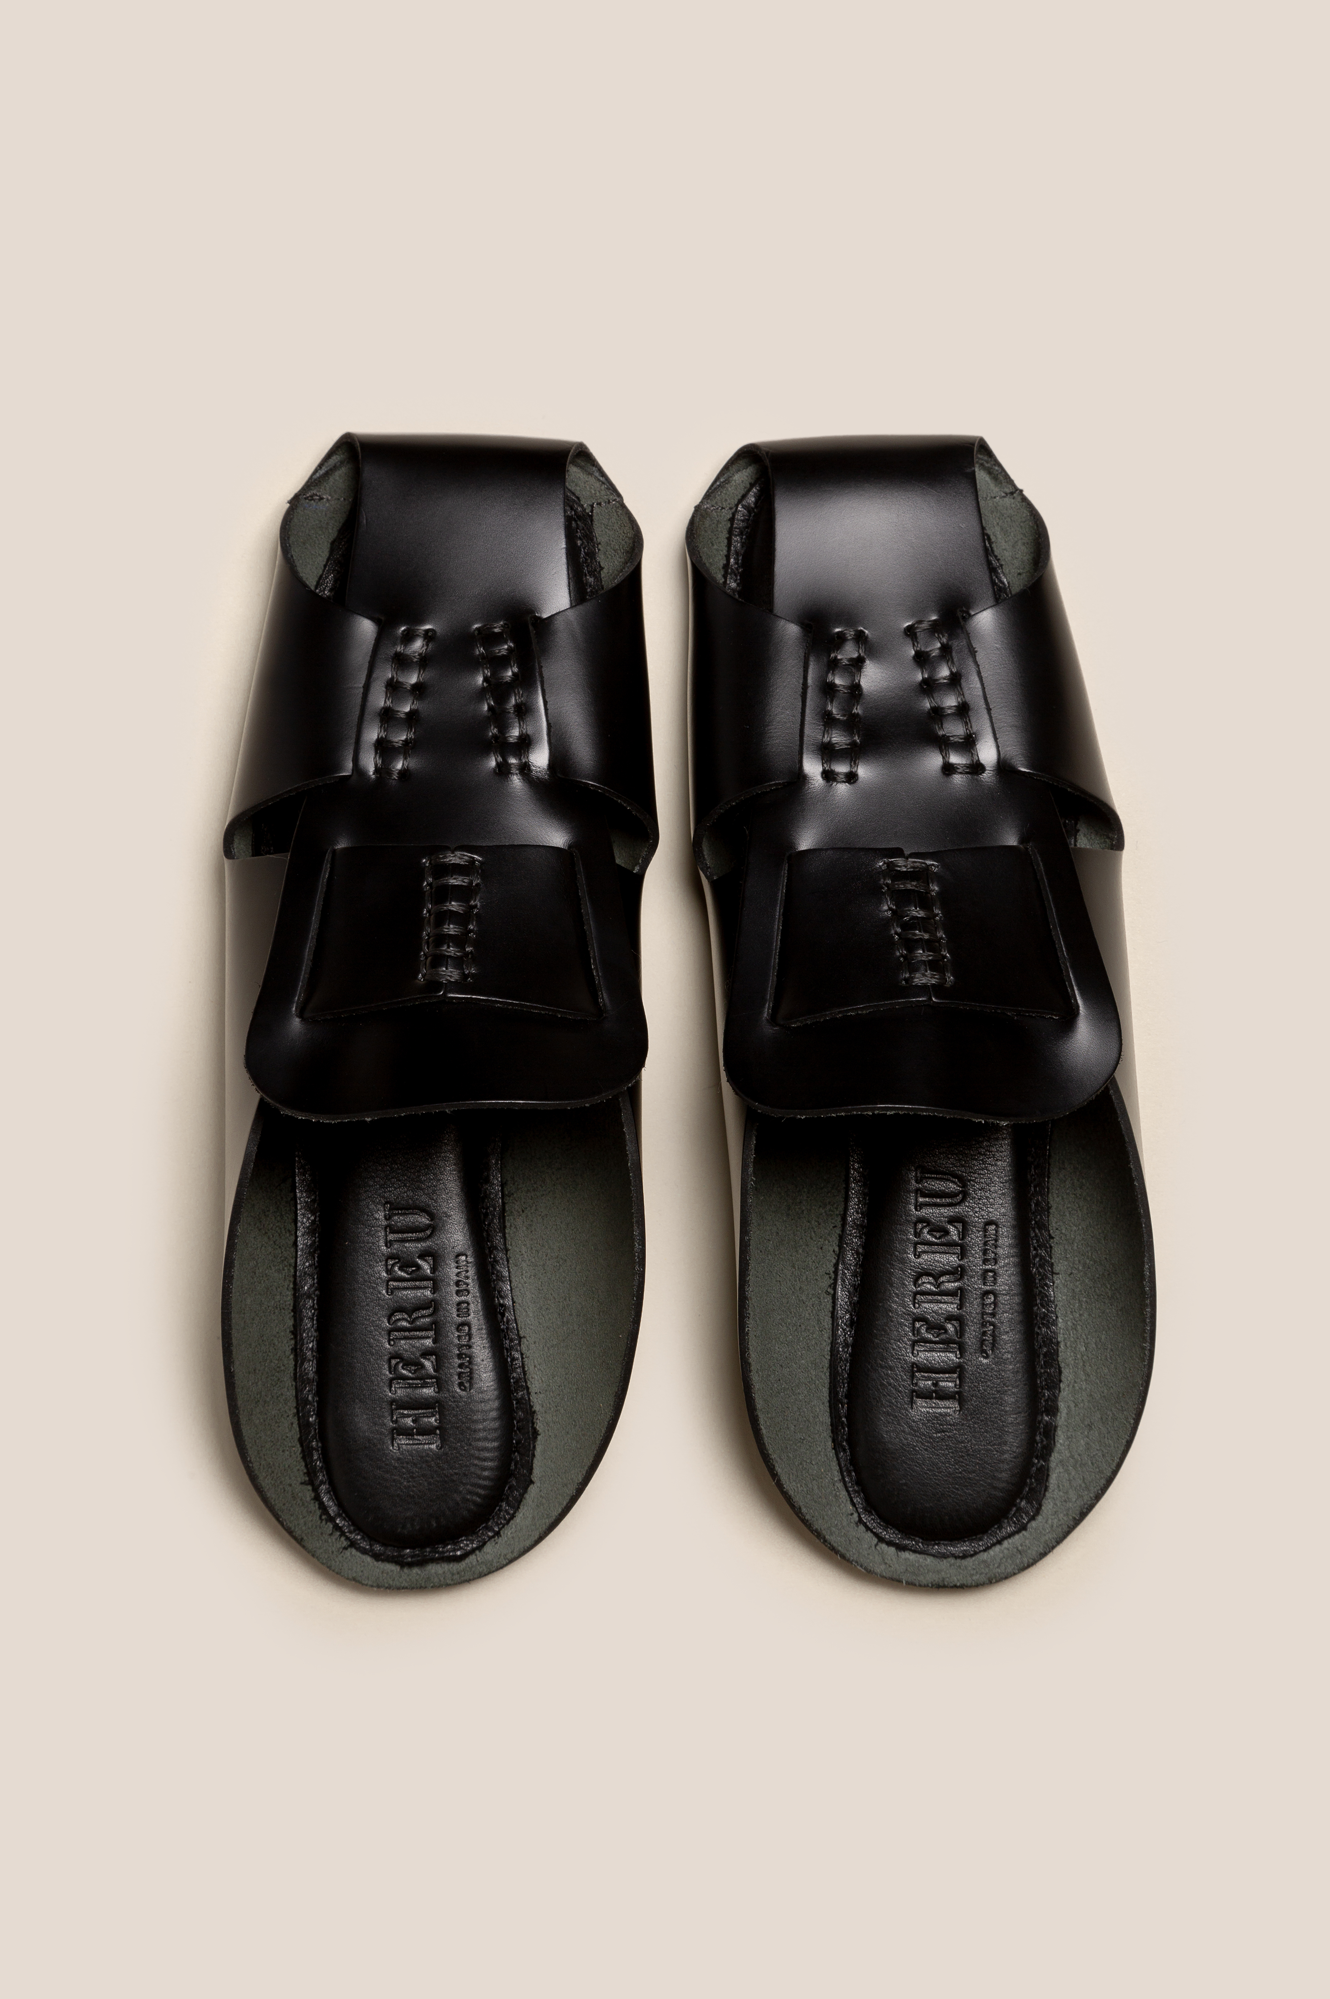 Louis Vuitton Cotton Canvas/Leather, Leather Bow Mule Sandals 40 fits 8.5  NEW